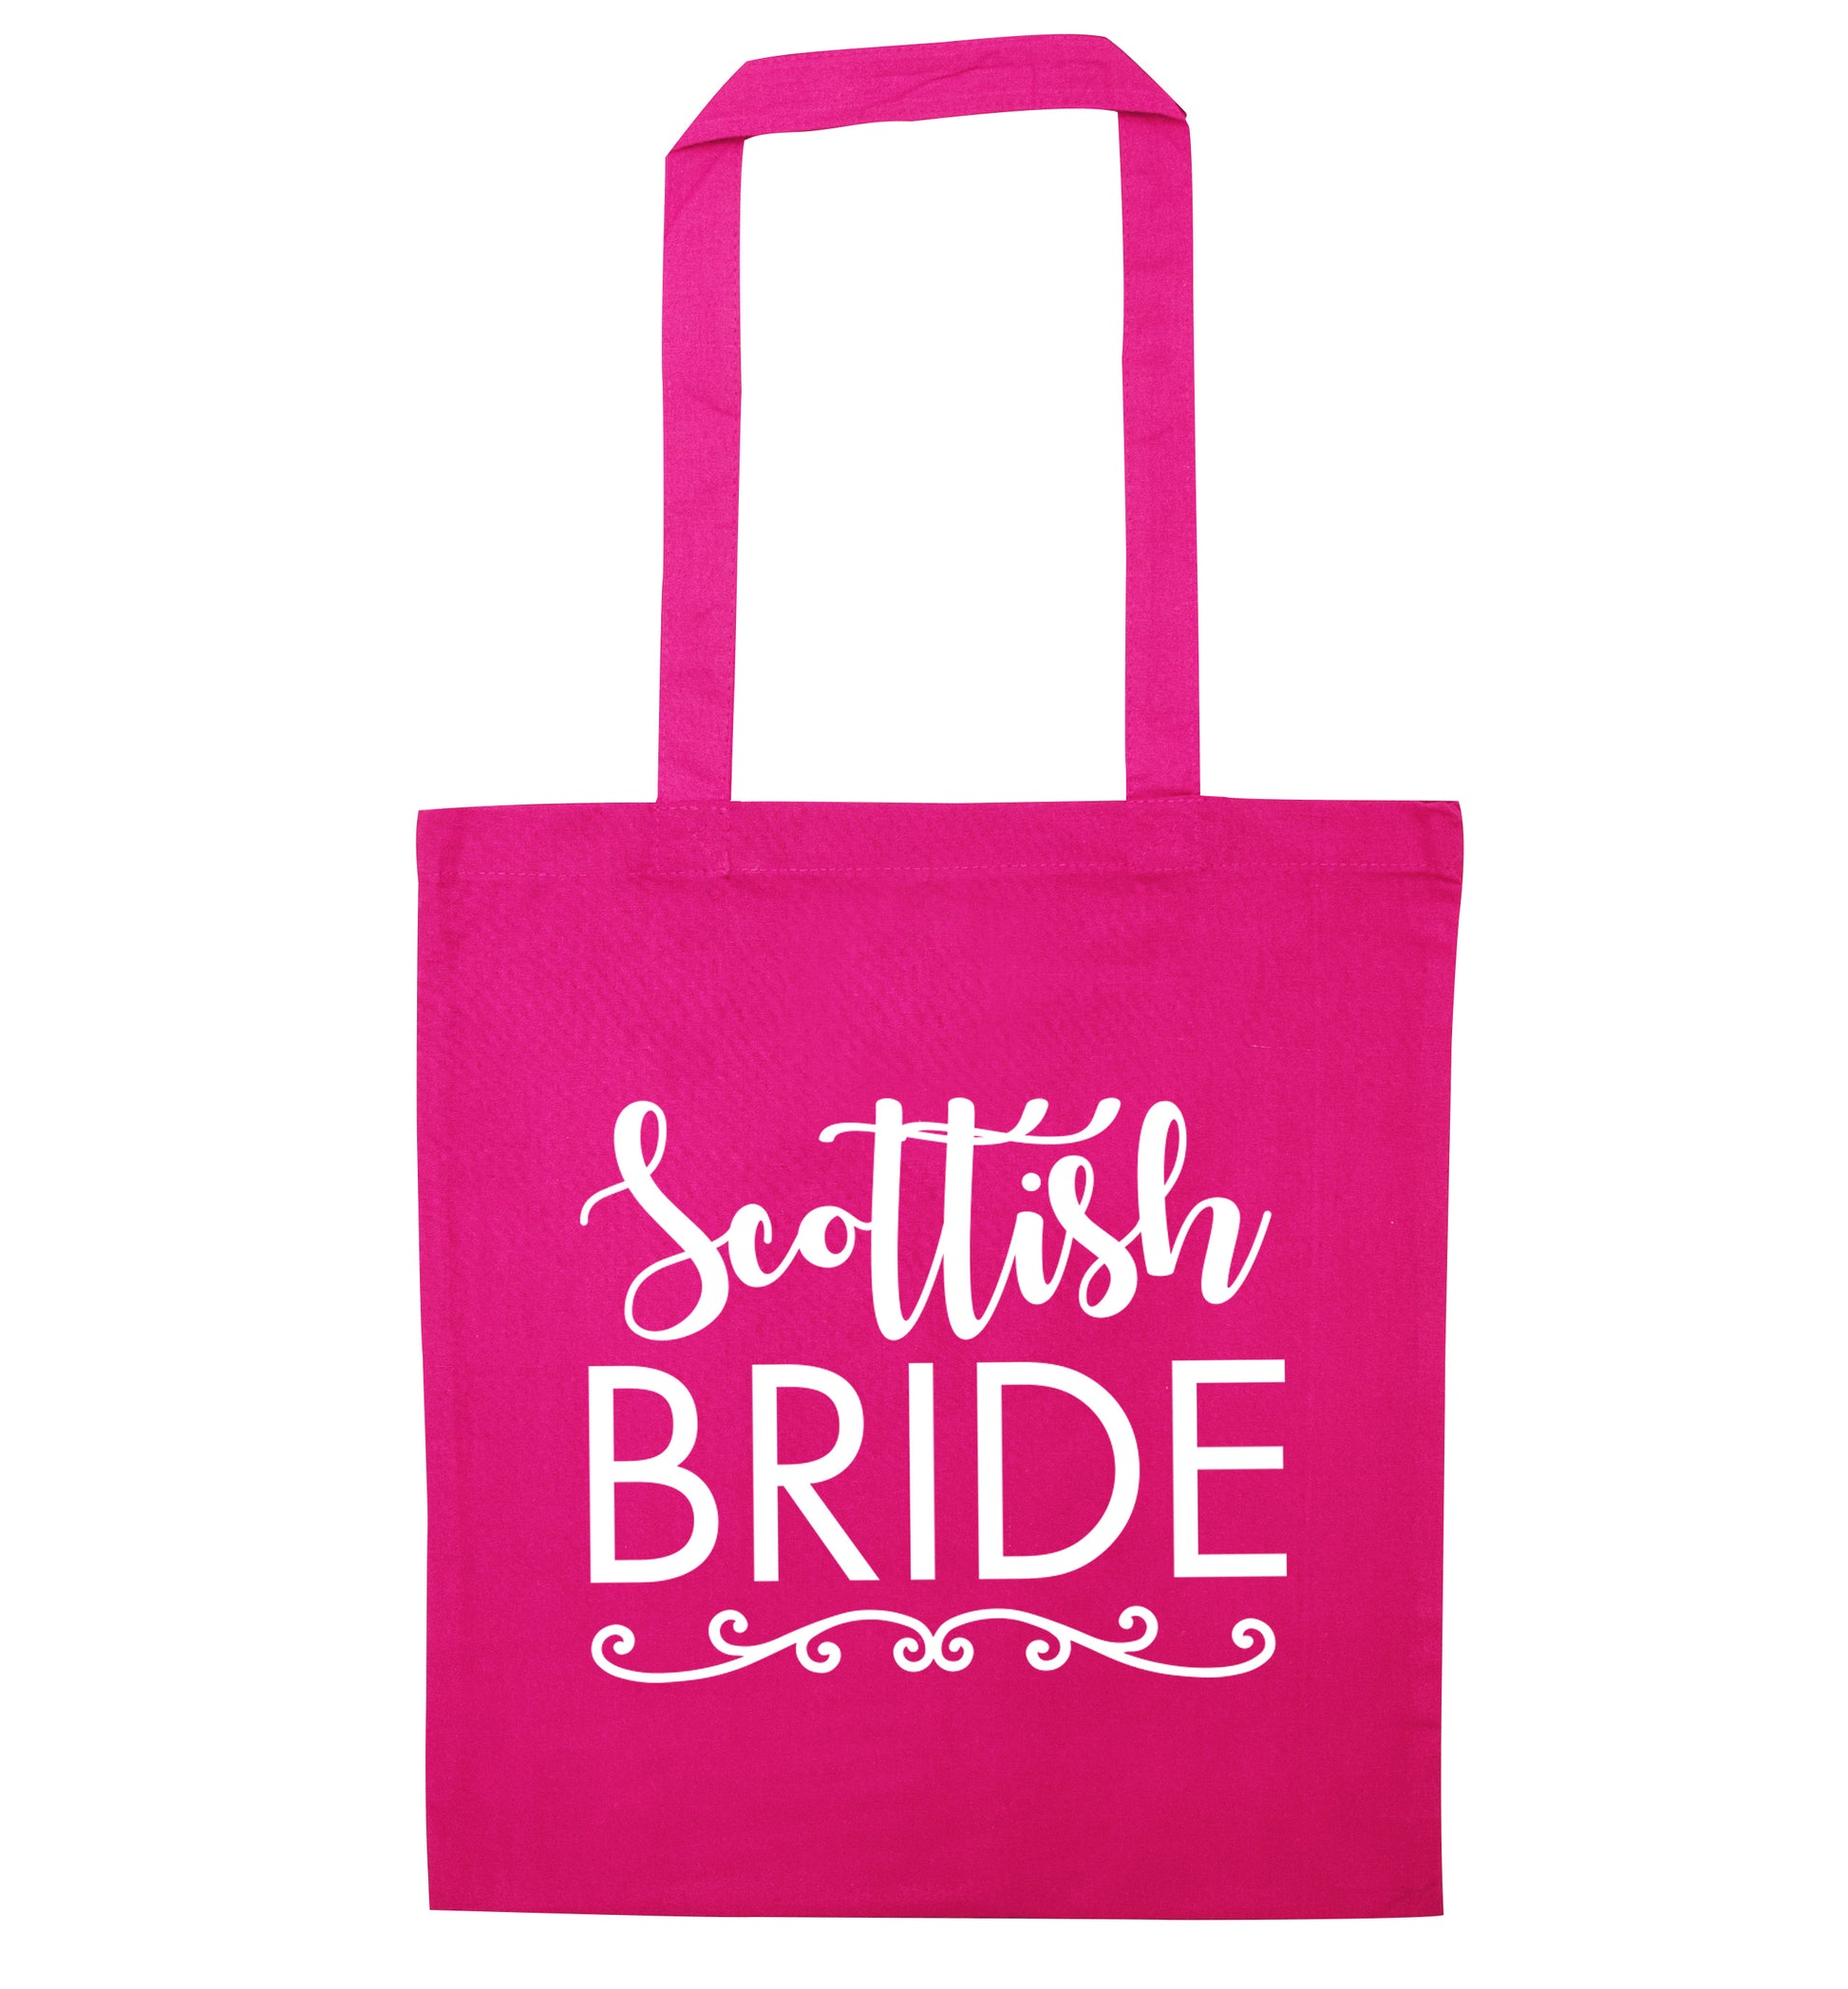 Scottish Bride pink tote bag